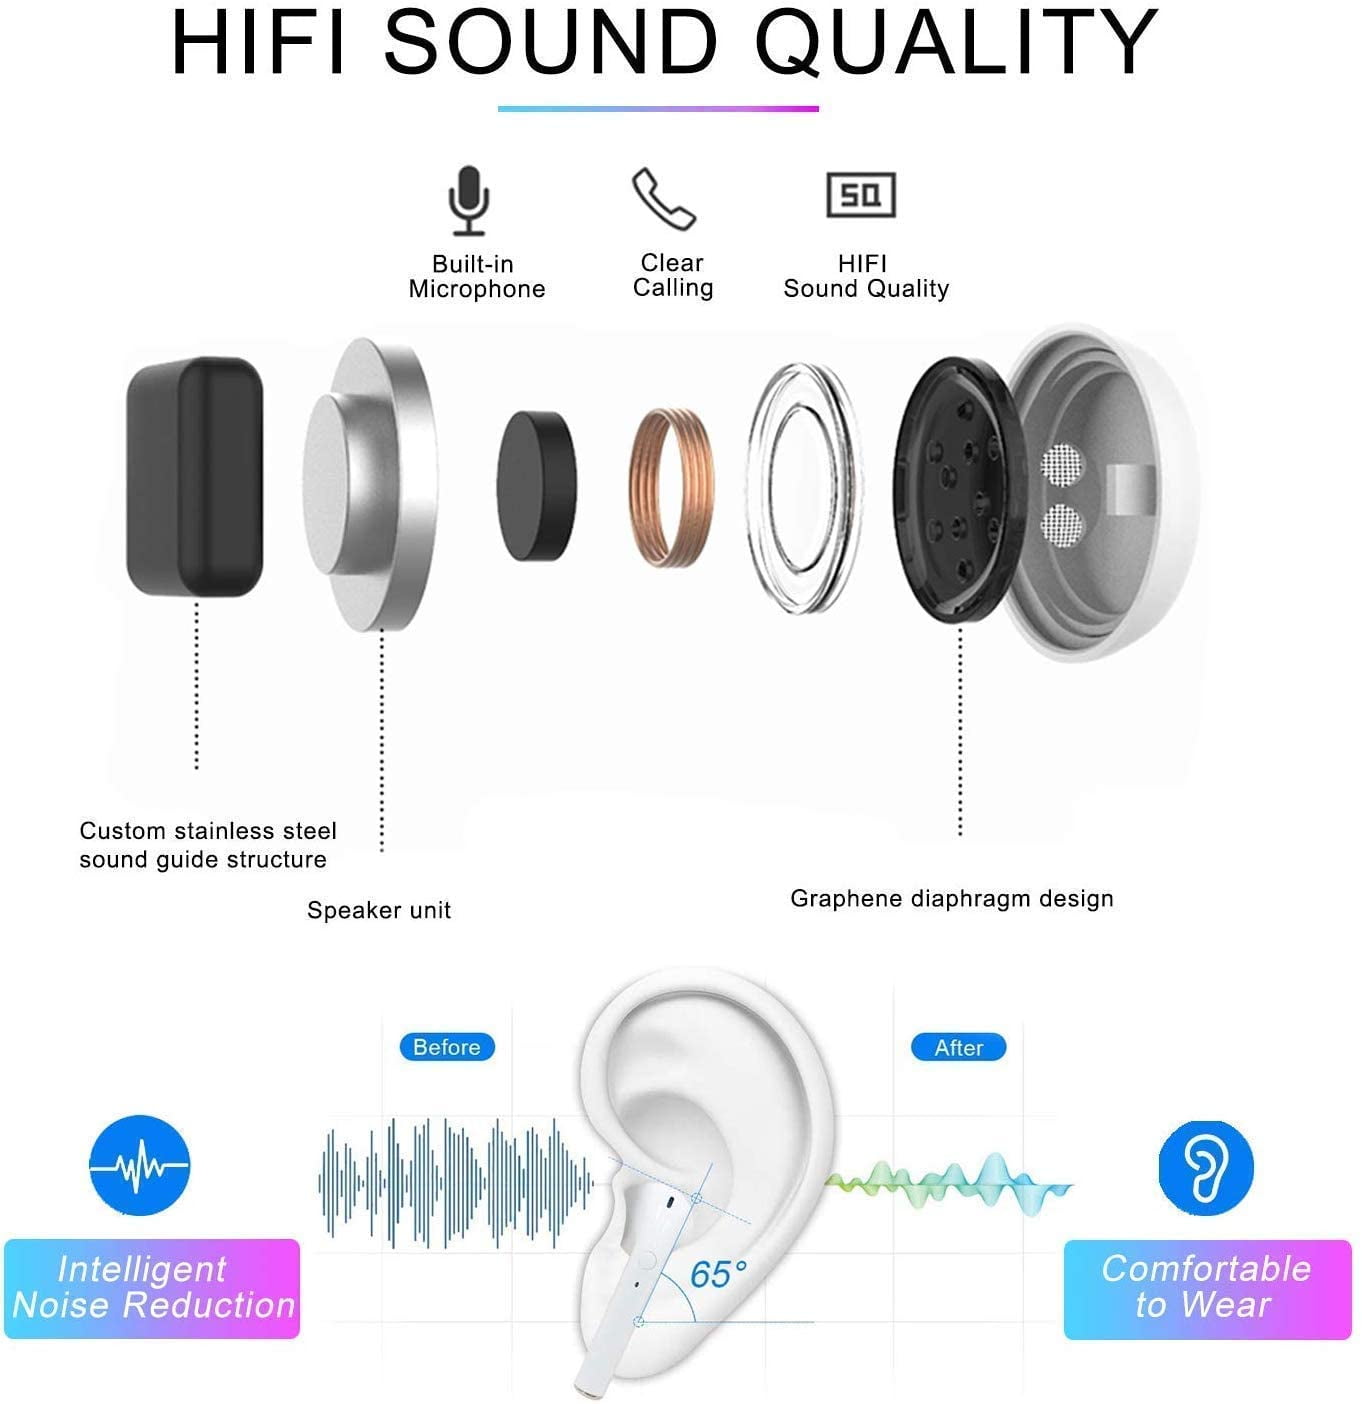 HZTC123 Bluetooth Kopfhörer in Ear Bluetooth 5.0 Headset Stereo-Minikopfhörer Sport Kabellose Kopfhörer mit Portable Mini Ladekästchen und Integriertem Mikrofon für Apple Airpod Android iPhone